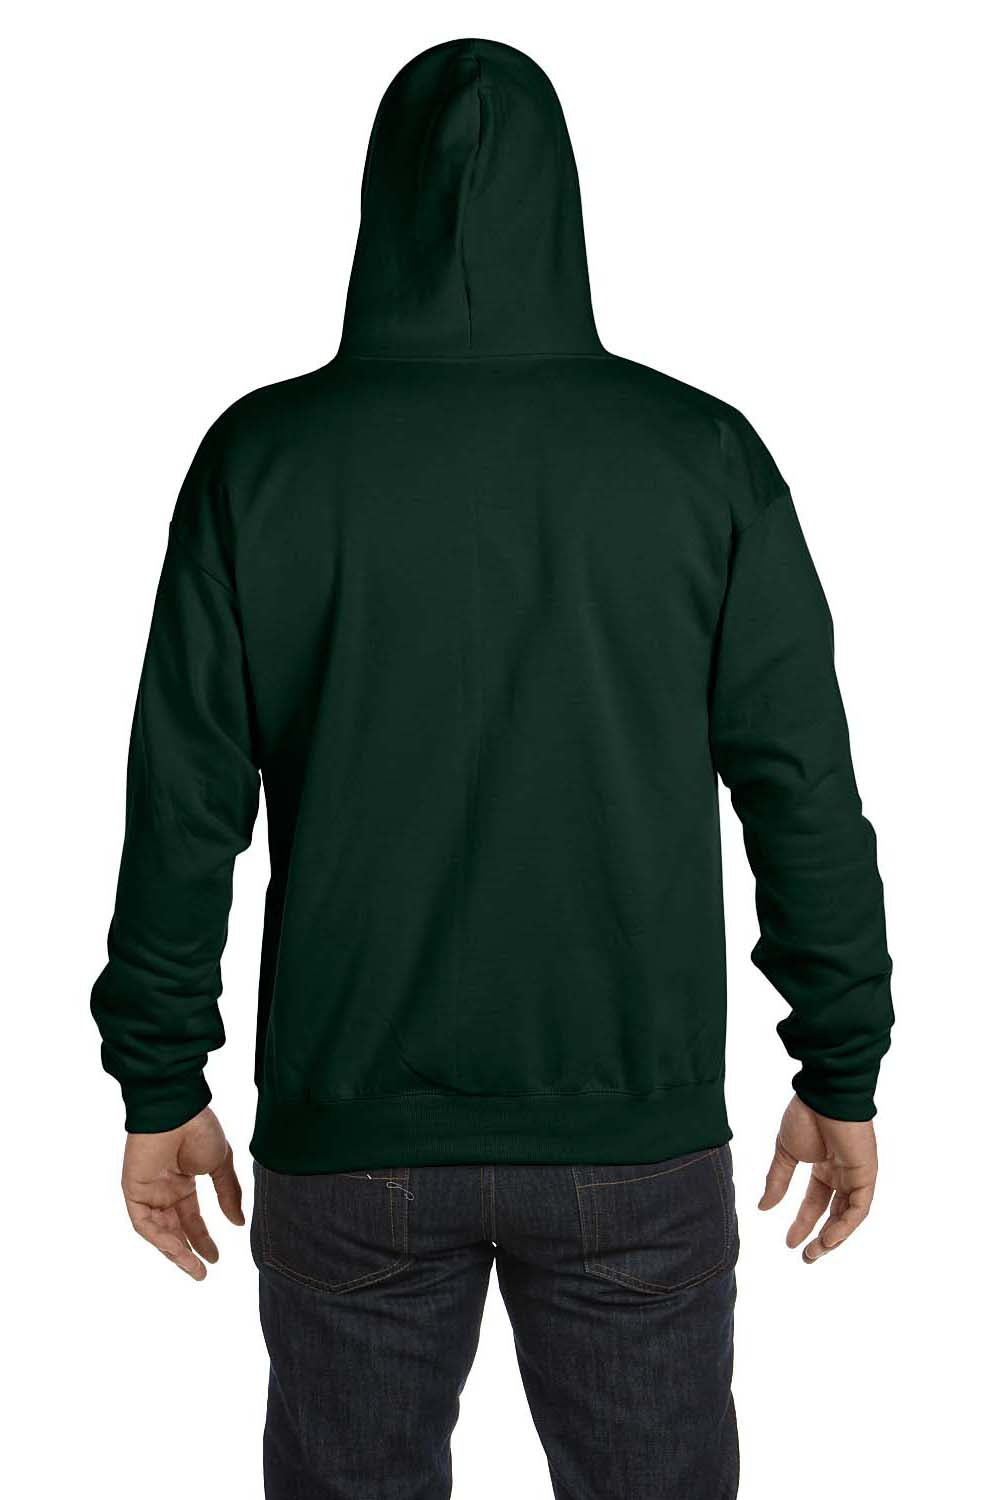 Hanes P180 Mens EcoSmart Print Pro XP Full Zip Hooded Sweatshirt Hoodie Forest Green Back